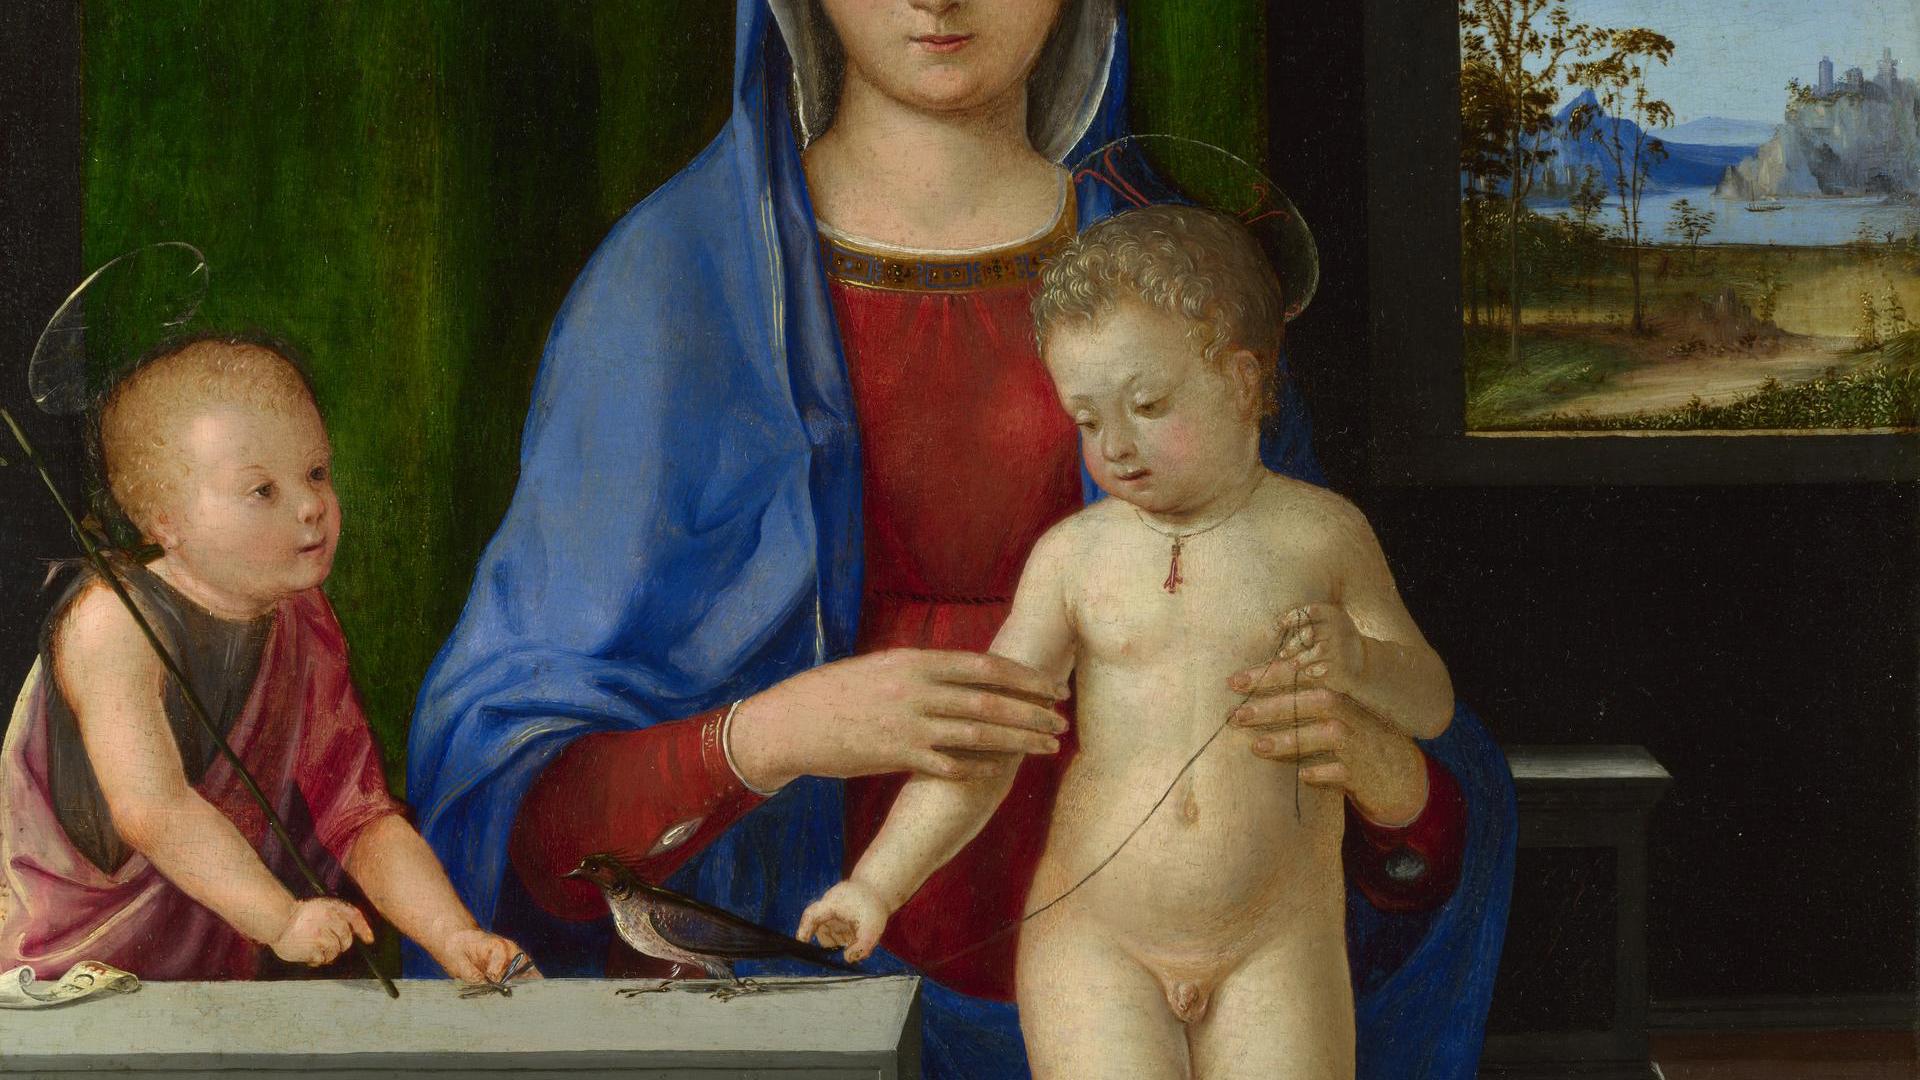 The Virgin and Child with Saint John by Antonio de Solario